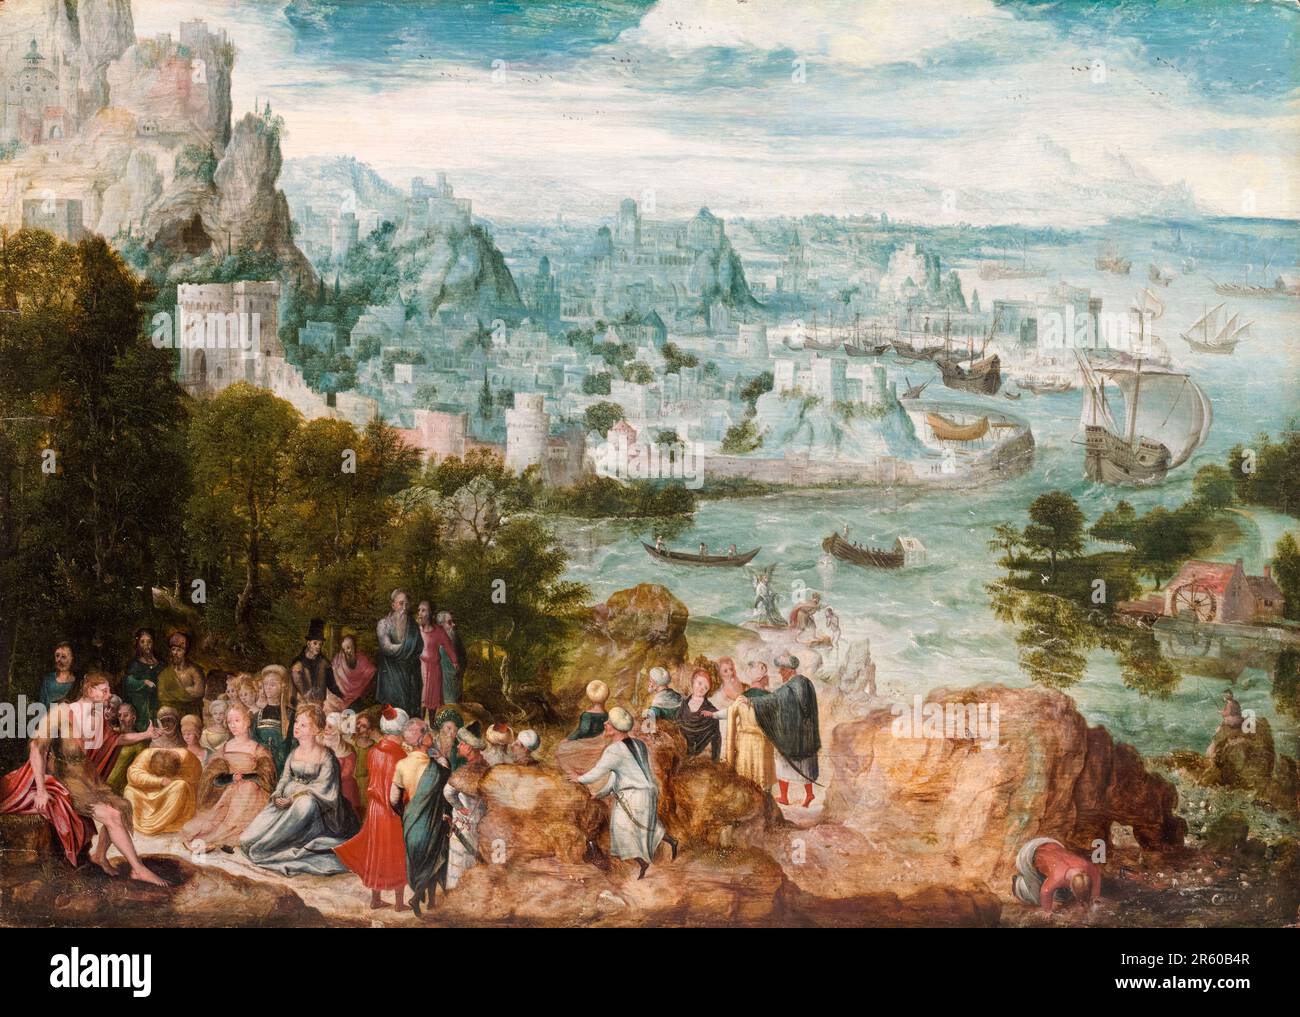 Herri Met de Bles, Paesaggio con San Giovanni Battista, dipinto intorno al 1540 Foto Stock